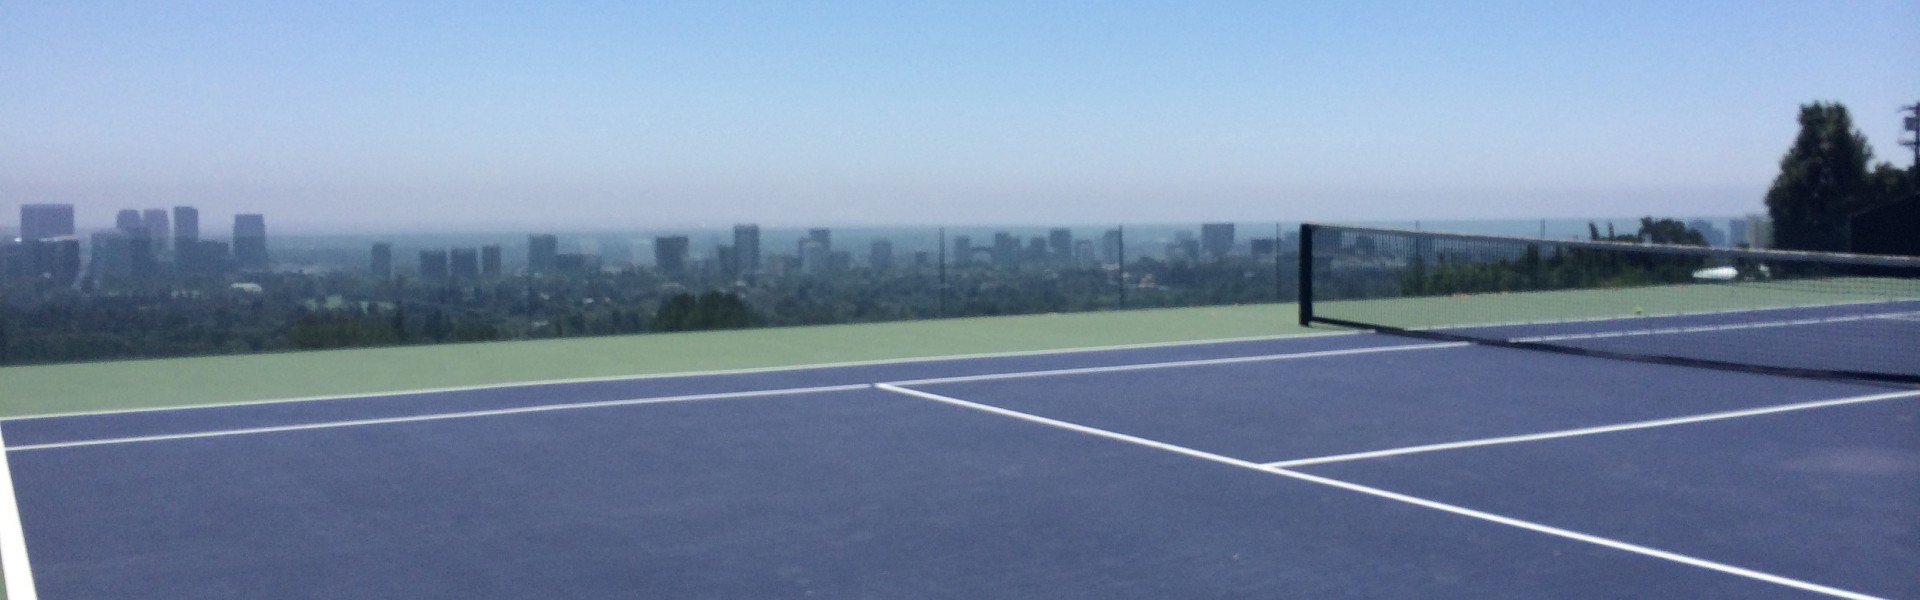 Infinity Tennis Court, Los Angeles